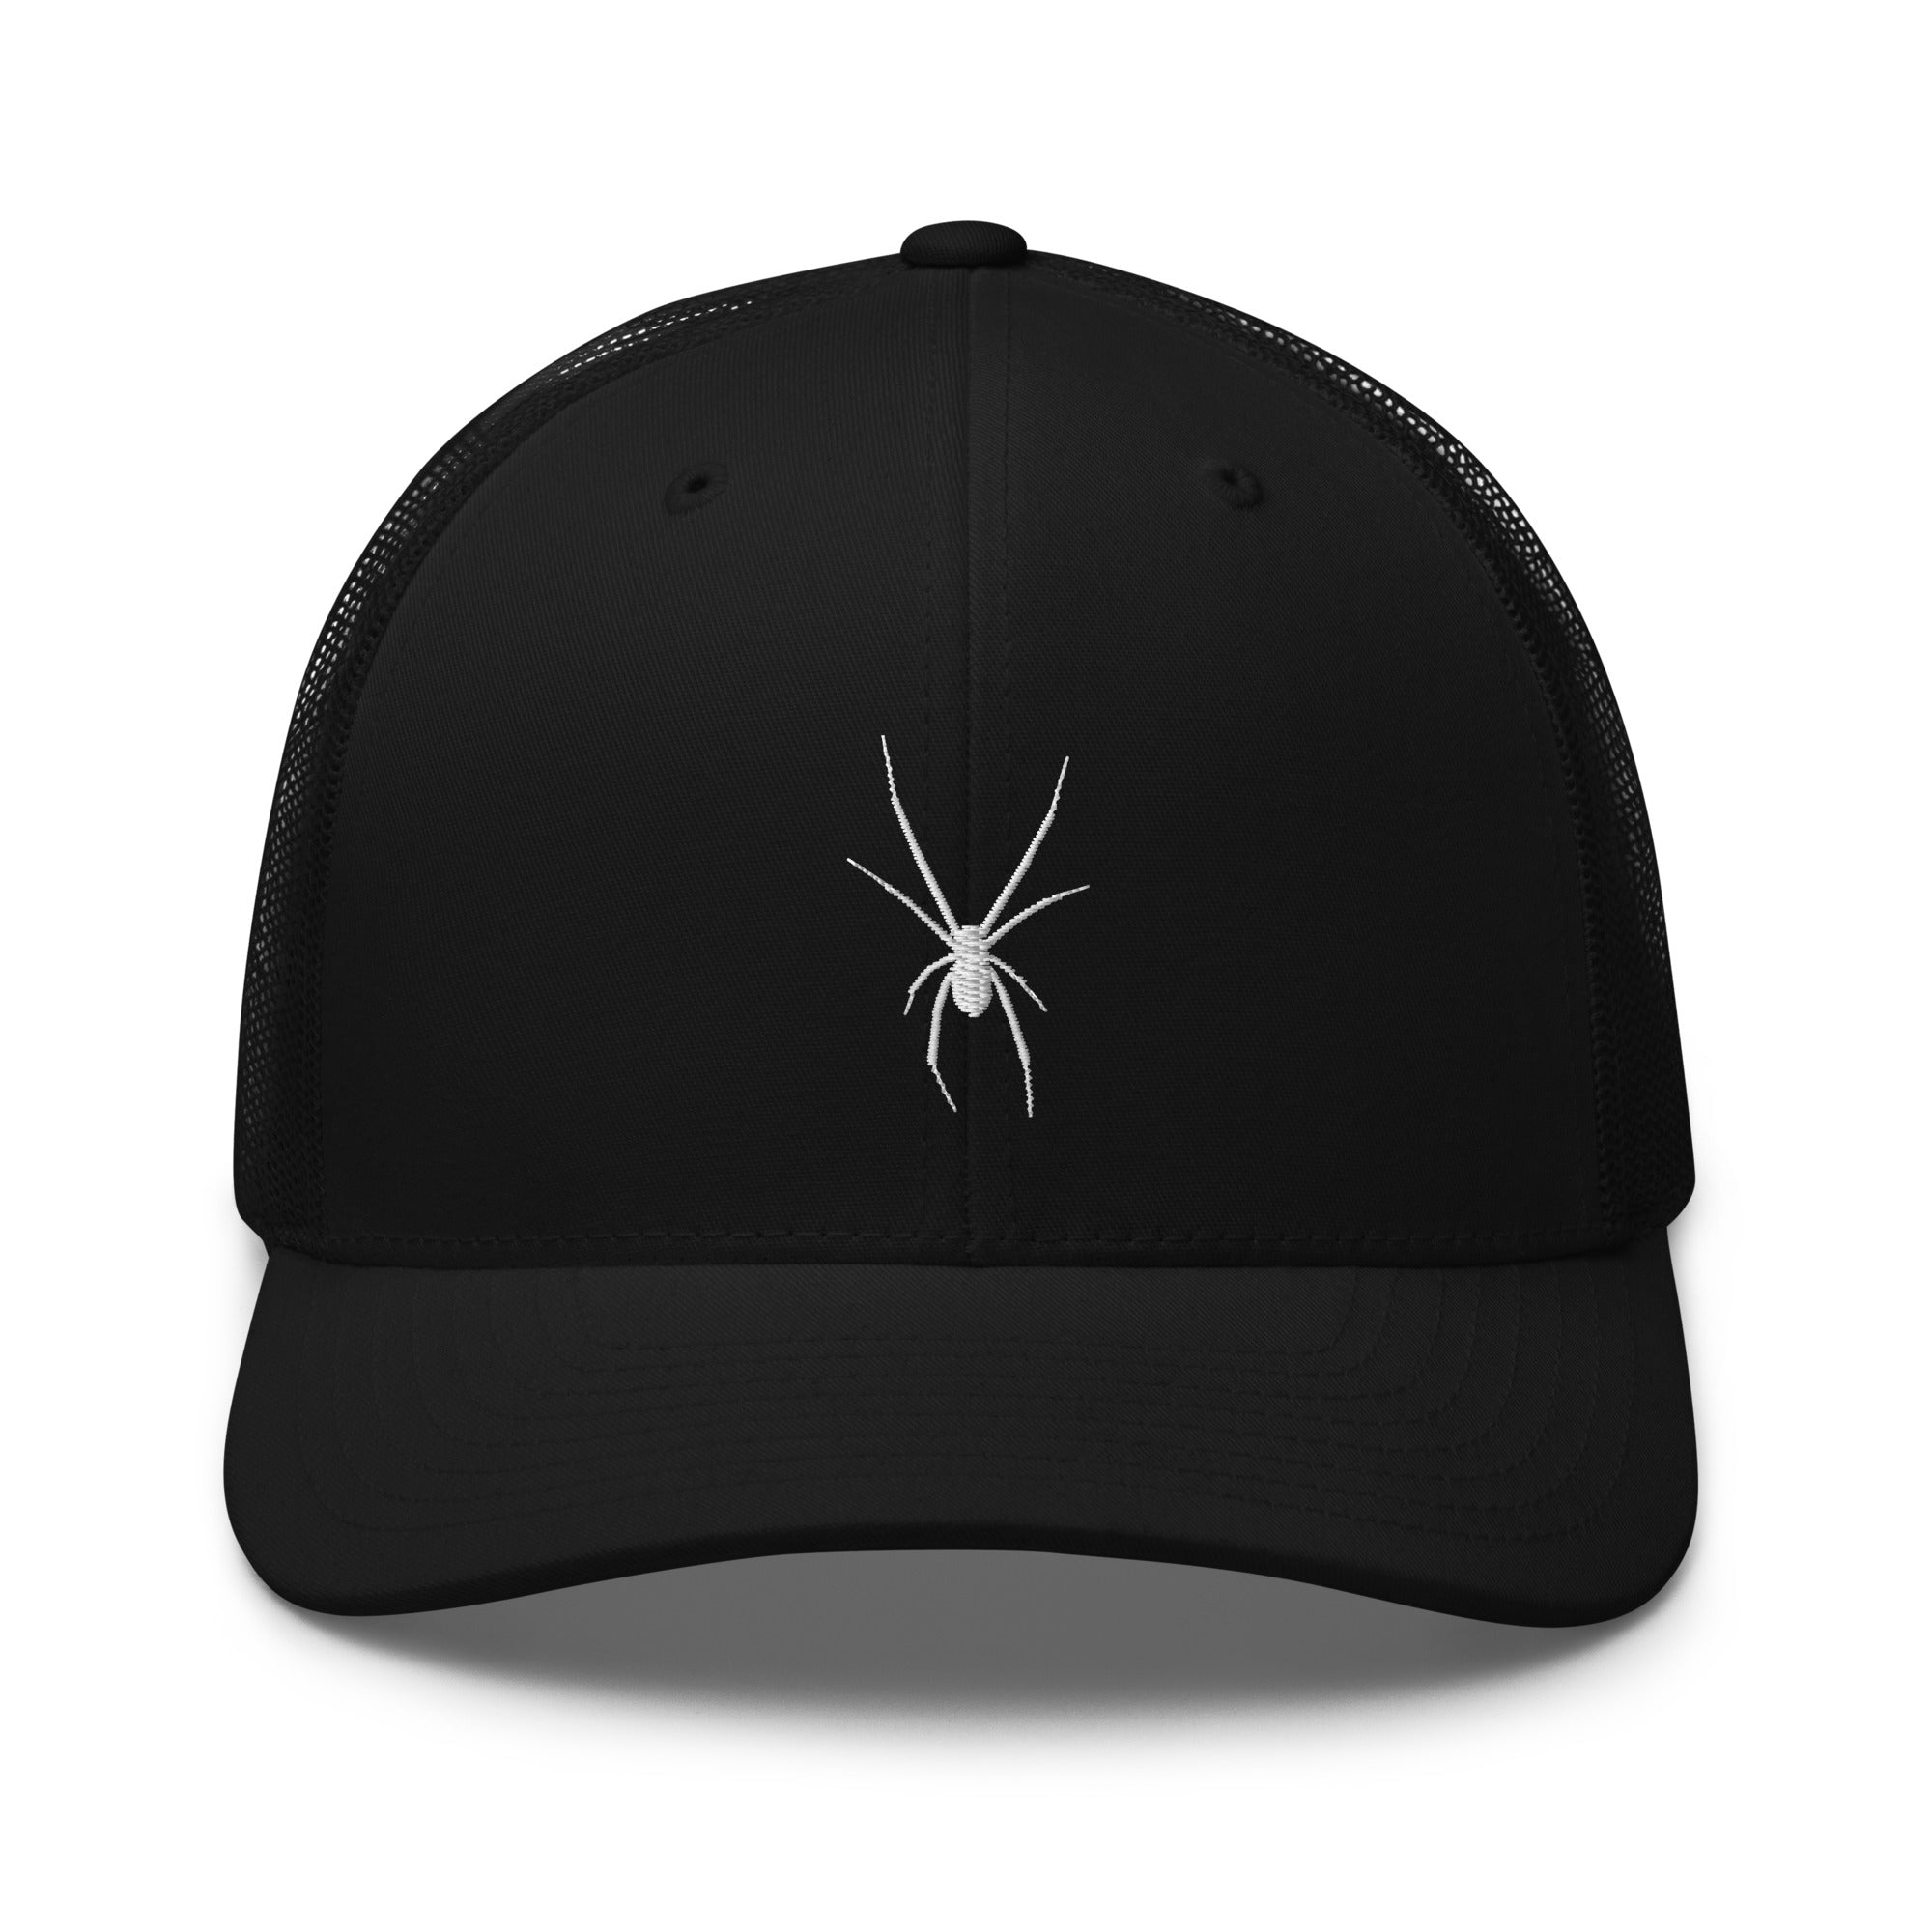 White Arachnid Creepy Black Widow Spider Embroidered Trucker Cap Snapback Hat